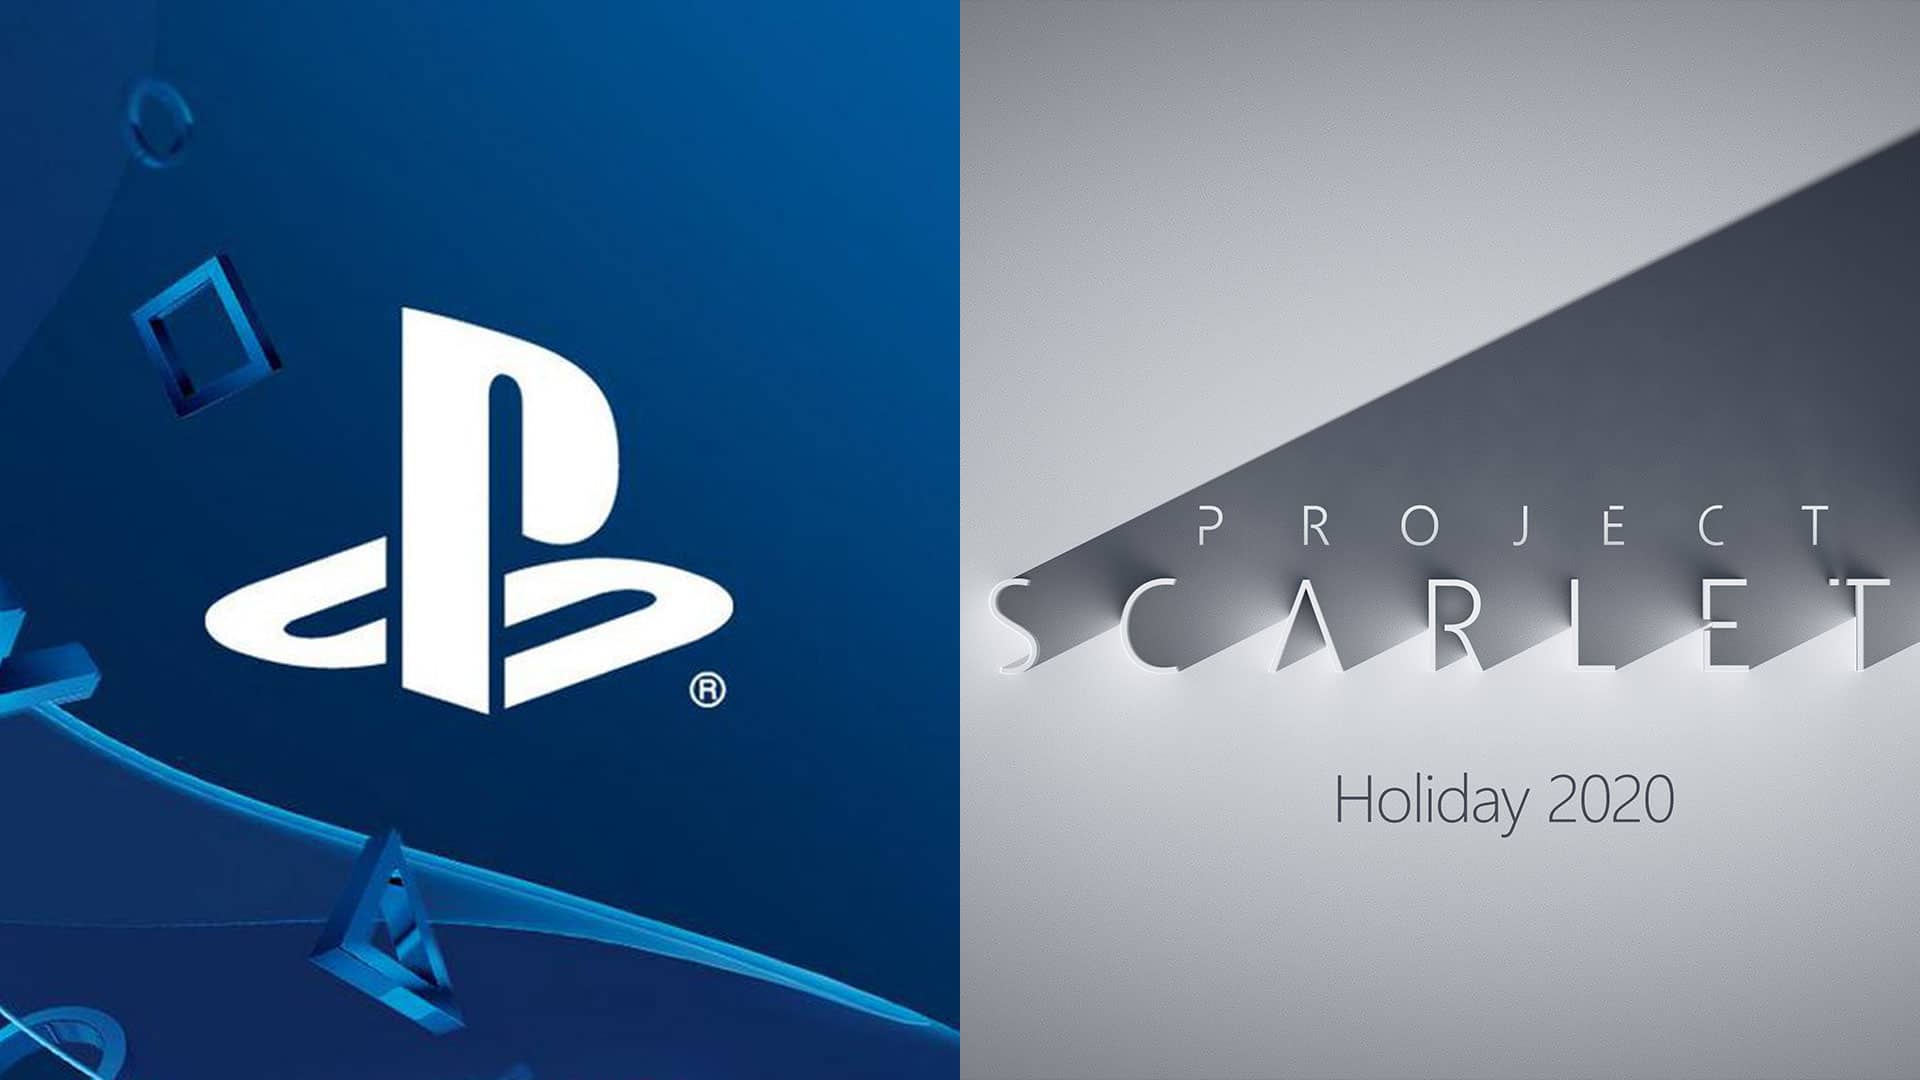 PS5 PlayStation 5 Xbox Scarlet Microsoft Sony next-gen